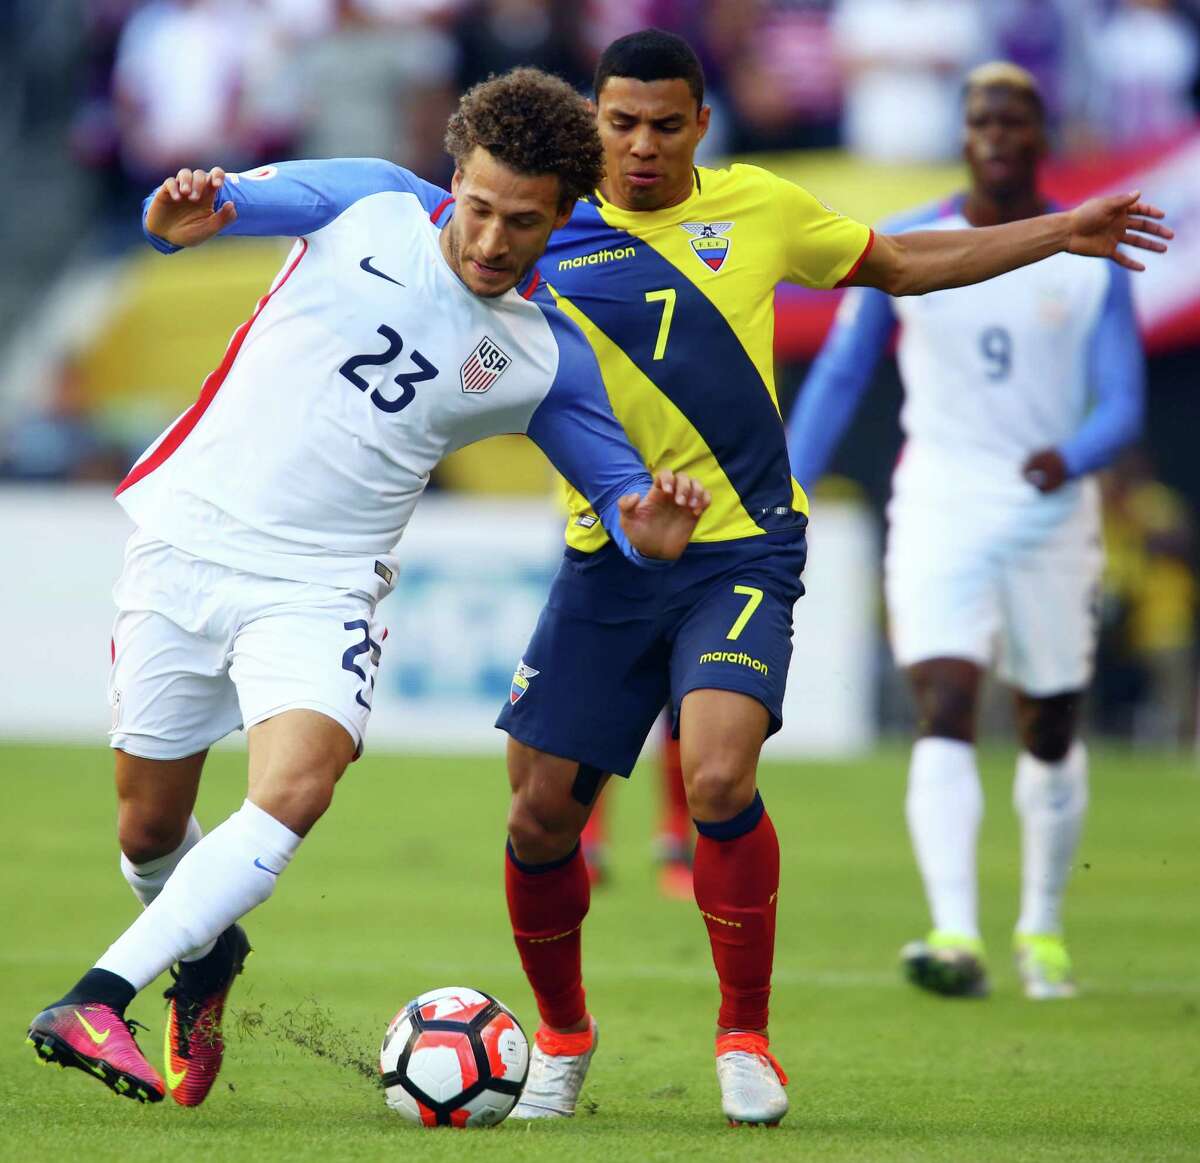 Seattle's soccer passion shows in USA's Copa America victory over Ecuador